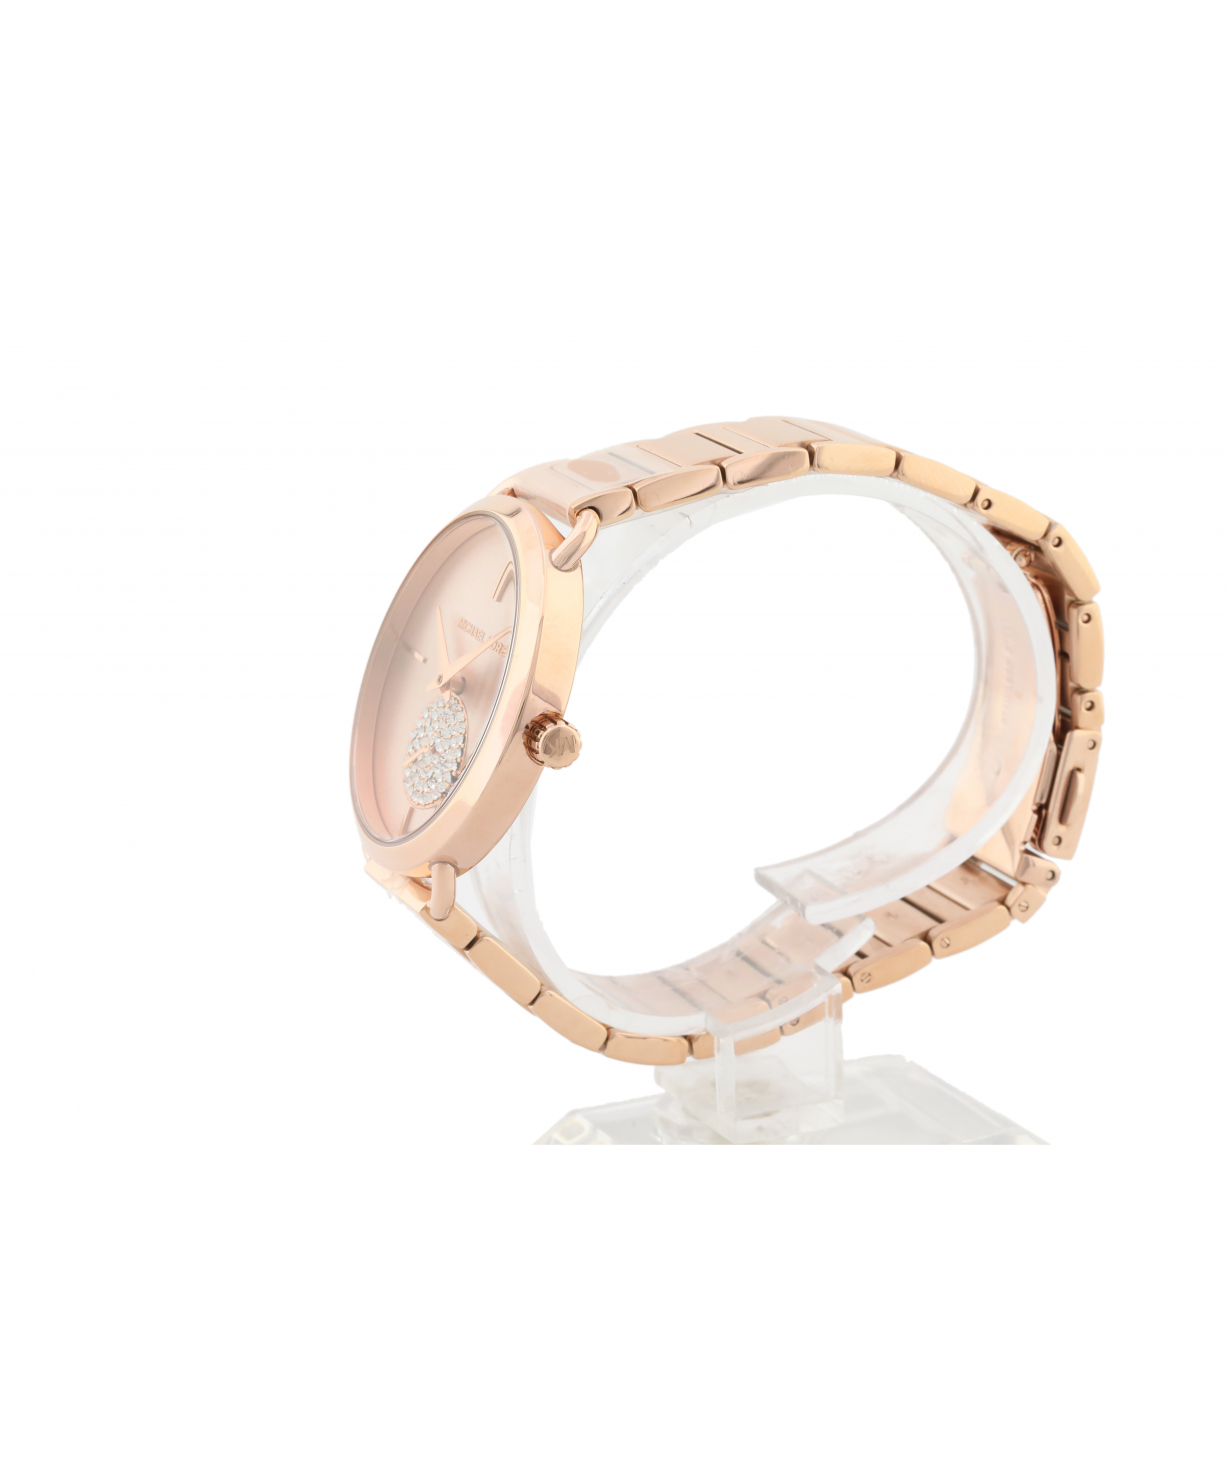 Wrist watch `Michael Kors` MK3640